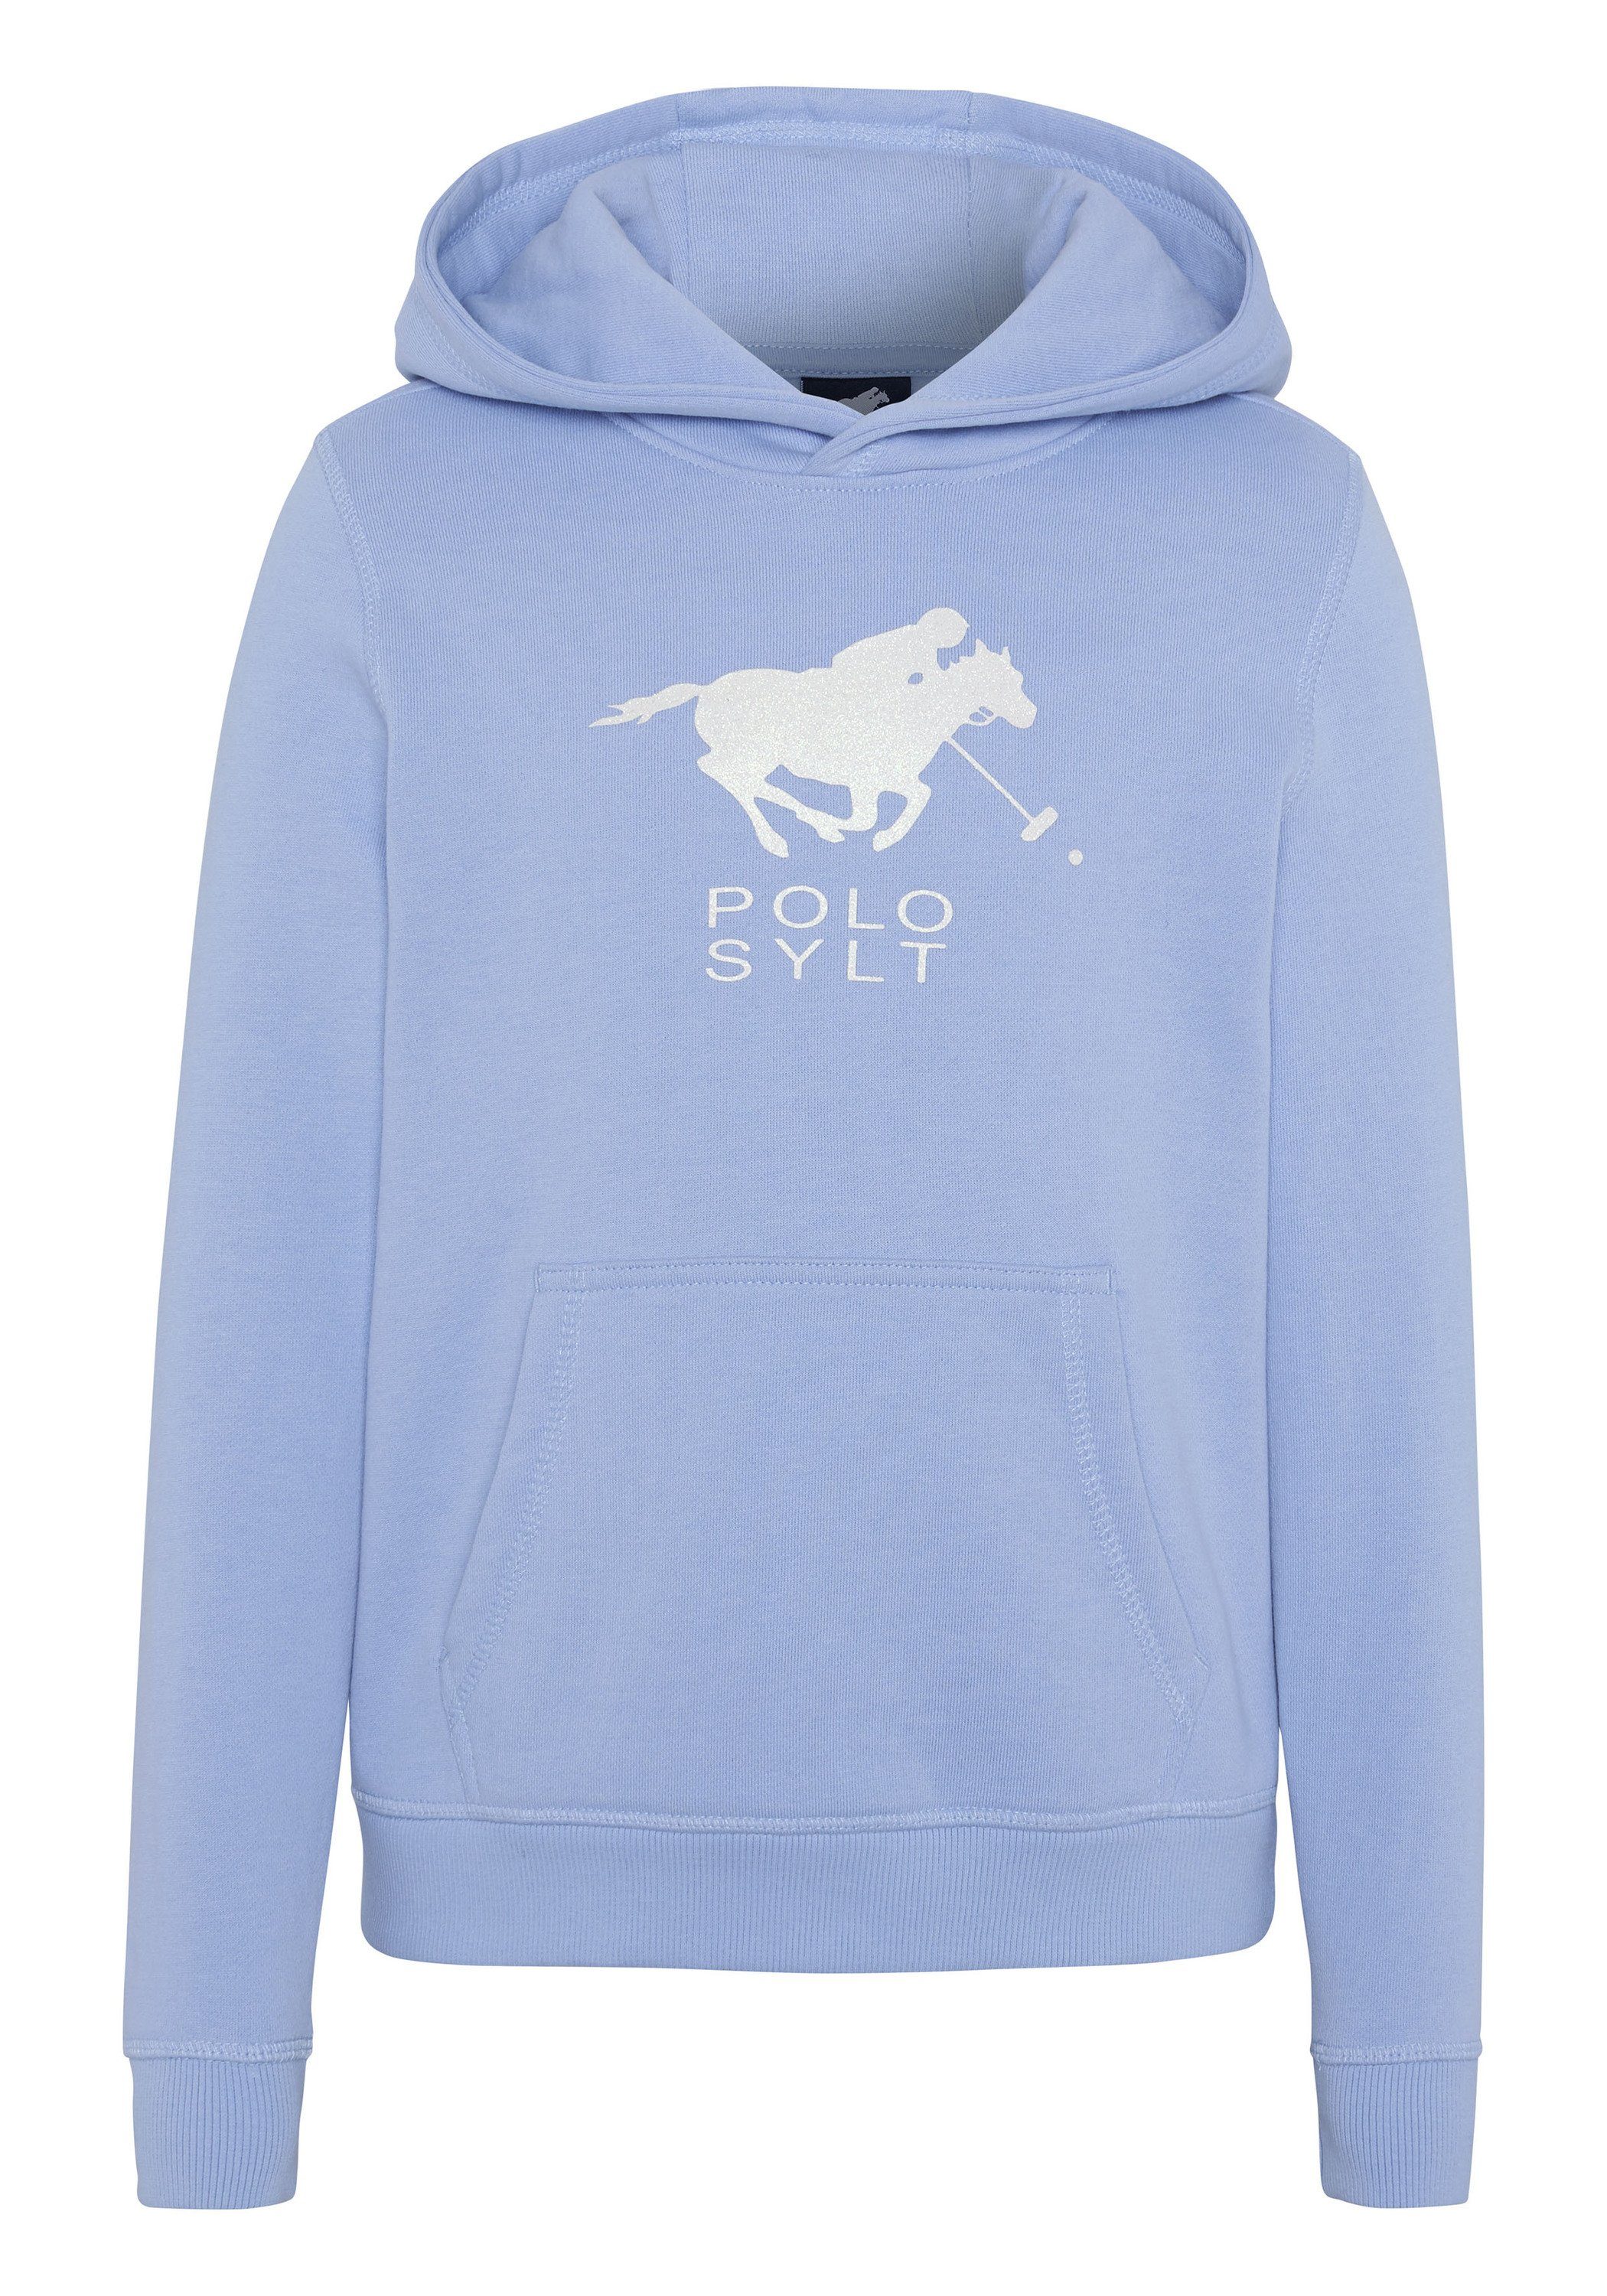 Polo Sylt Sweatshirt mit glitzerndem Blue Label-Motiv Brunnera